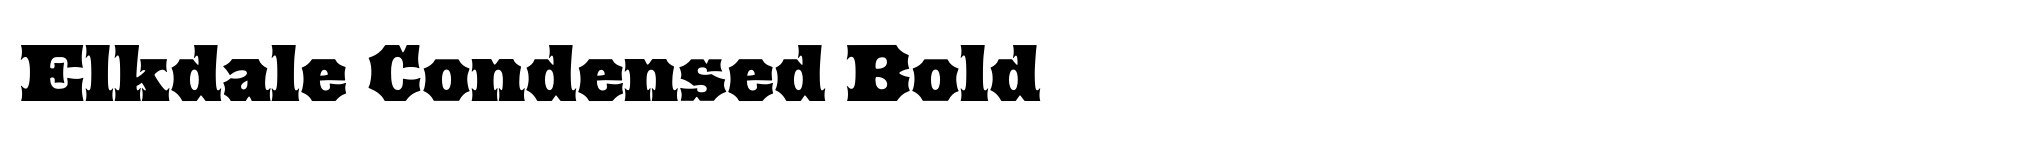 Elkdale Condensed Bold image